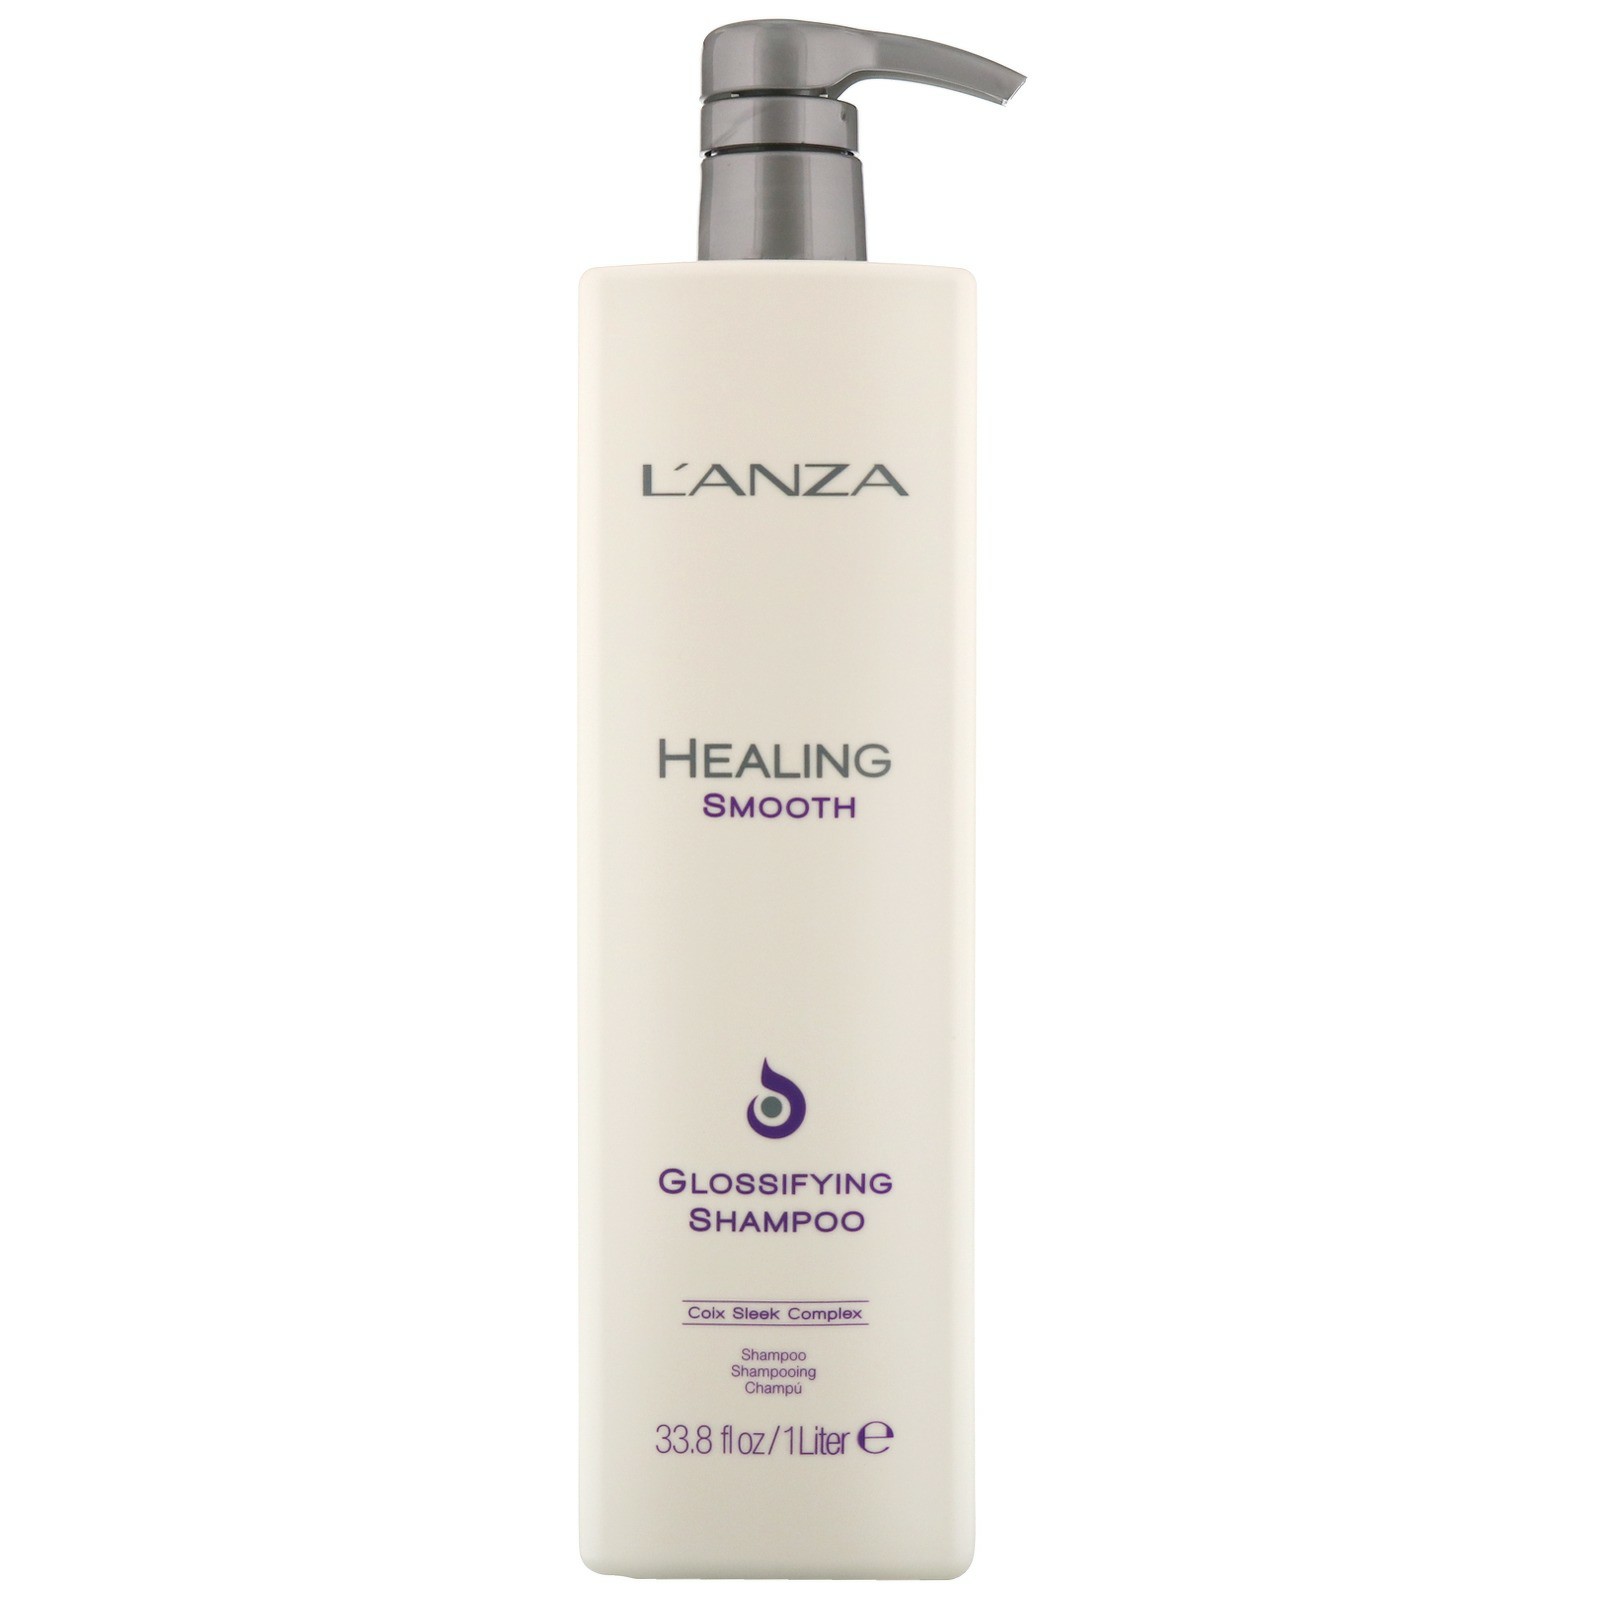 1196437-lanza-healing-smooth-glossifying-shampoo-1000ml1